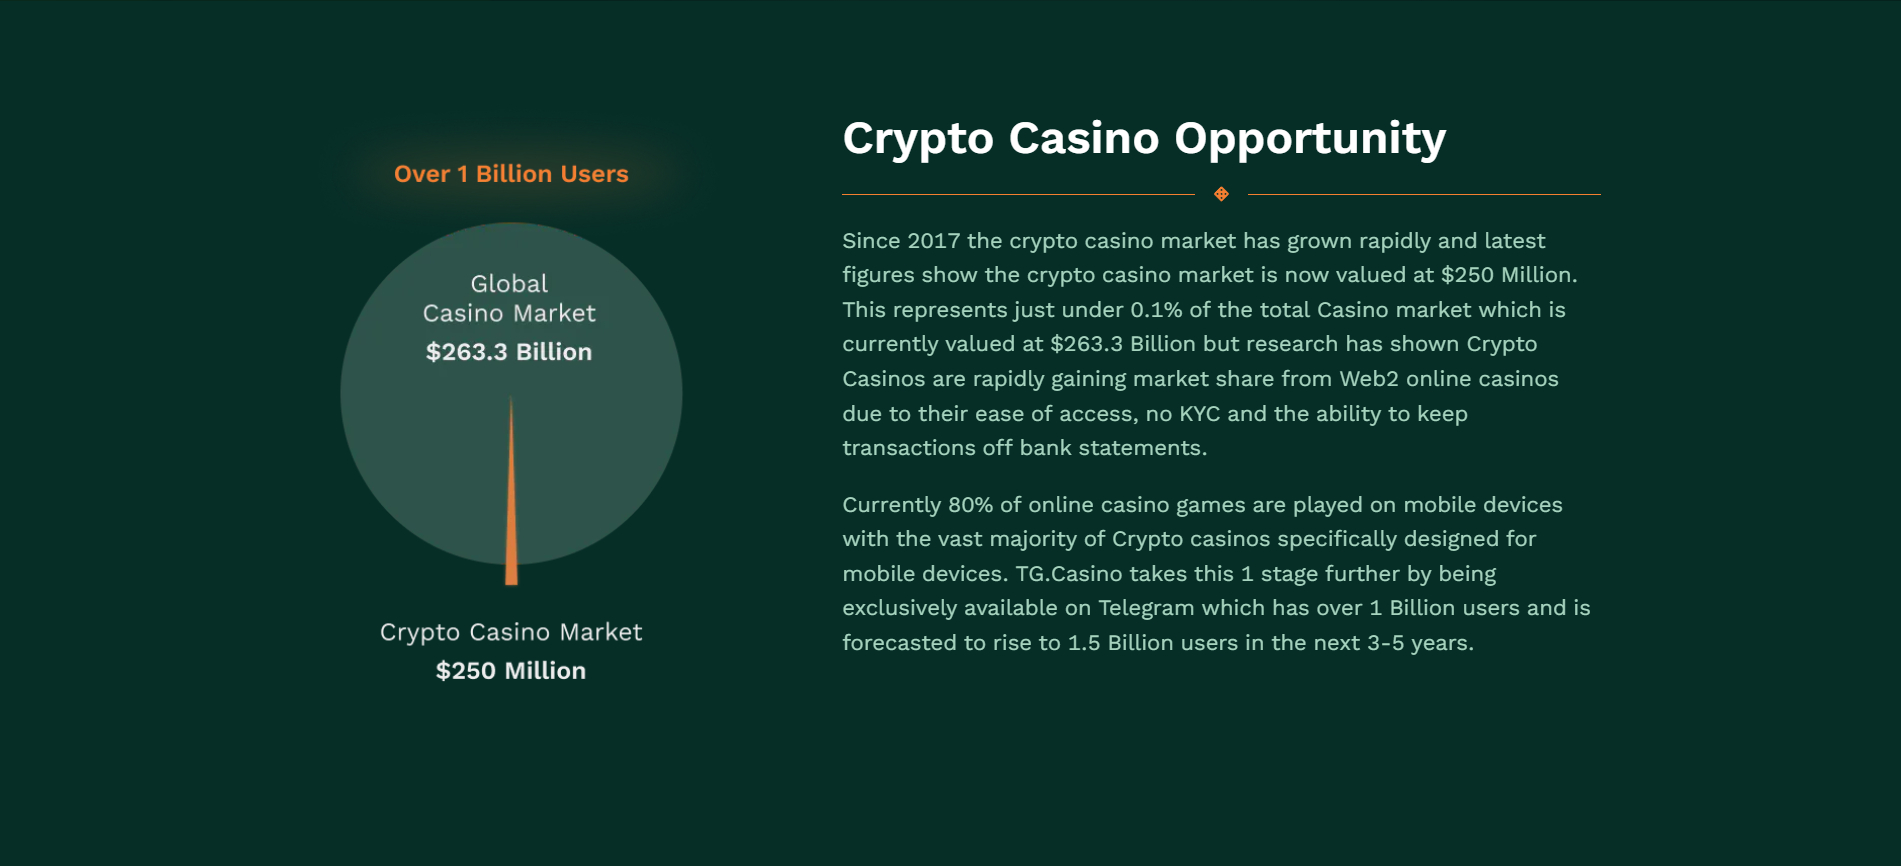 Crypto casino opportunity chart by TG.Casino